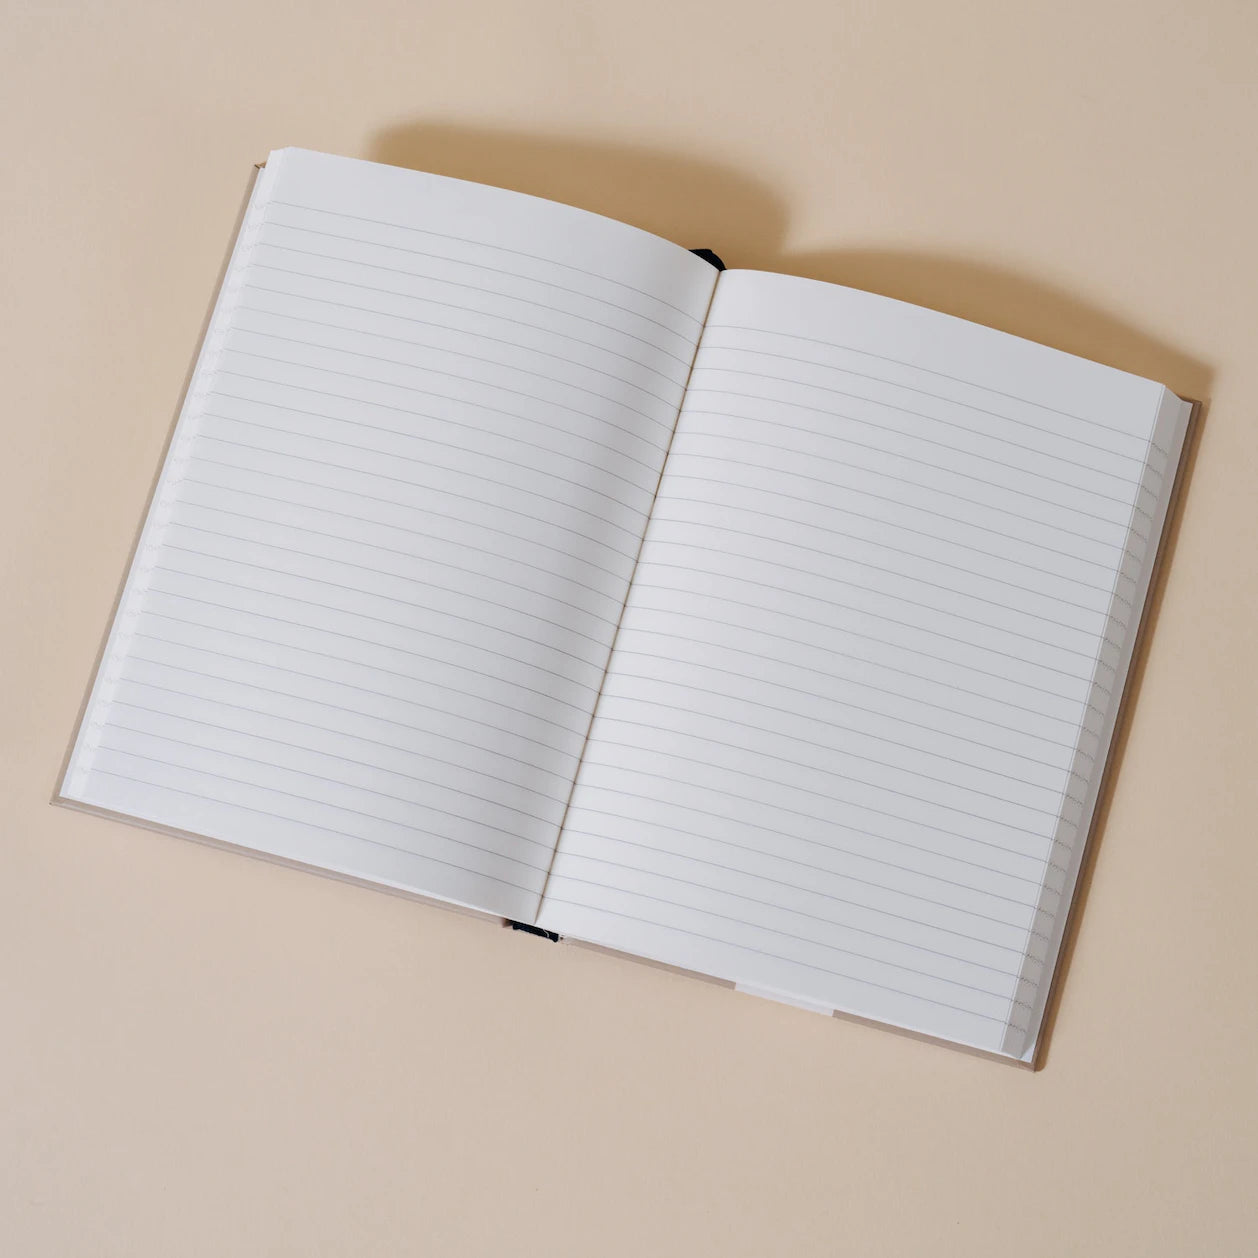 Le Classique Lined Notebook